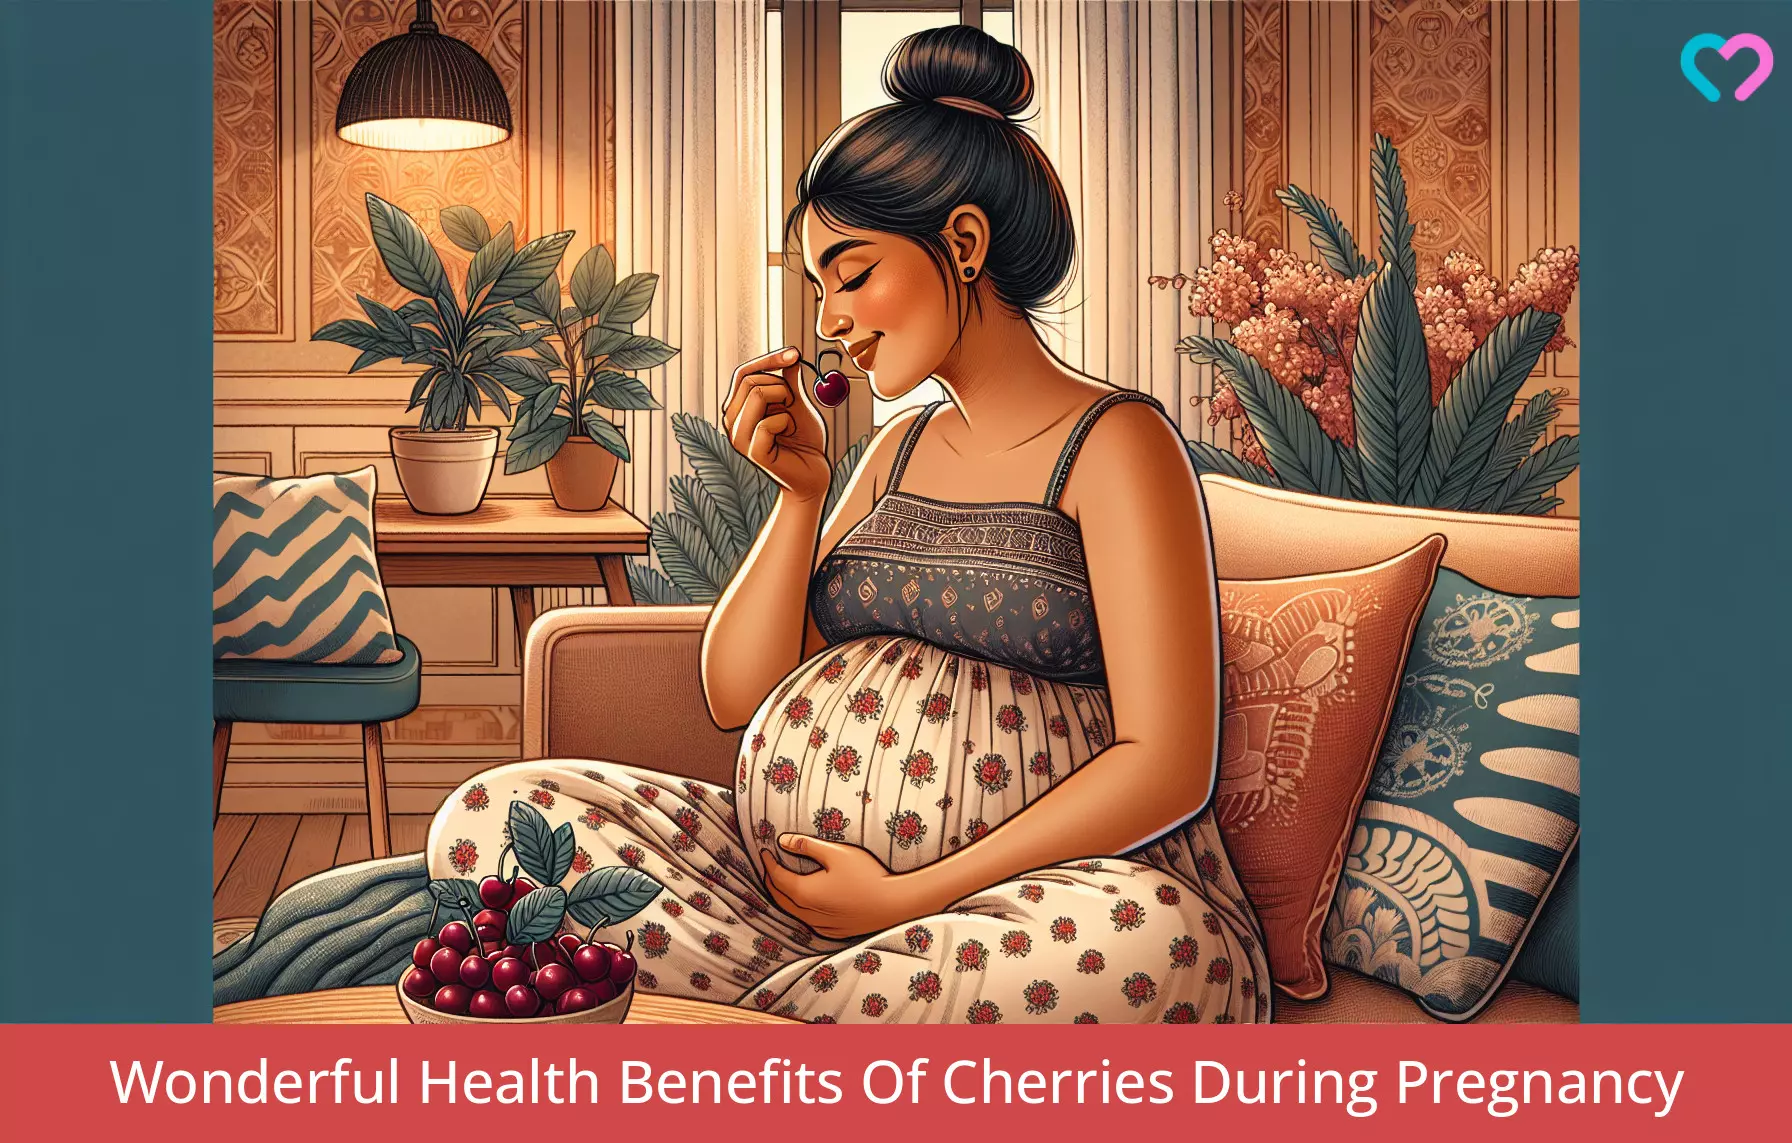 cherries during pregnancy_illustration